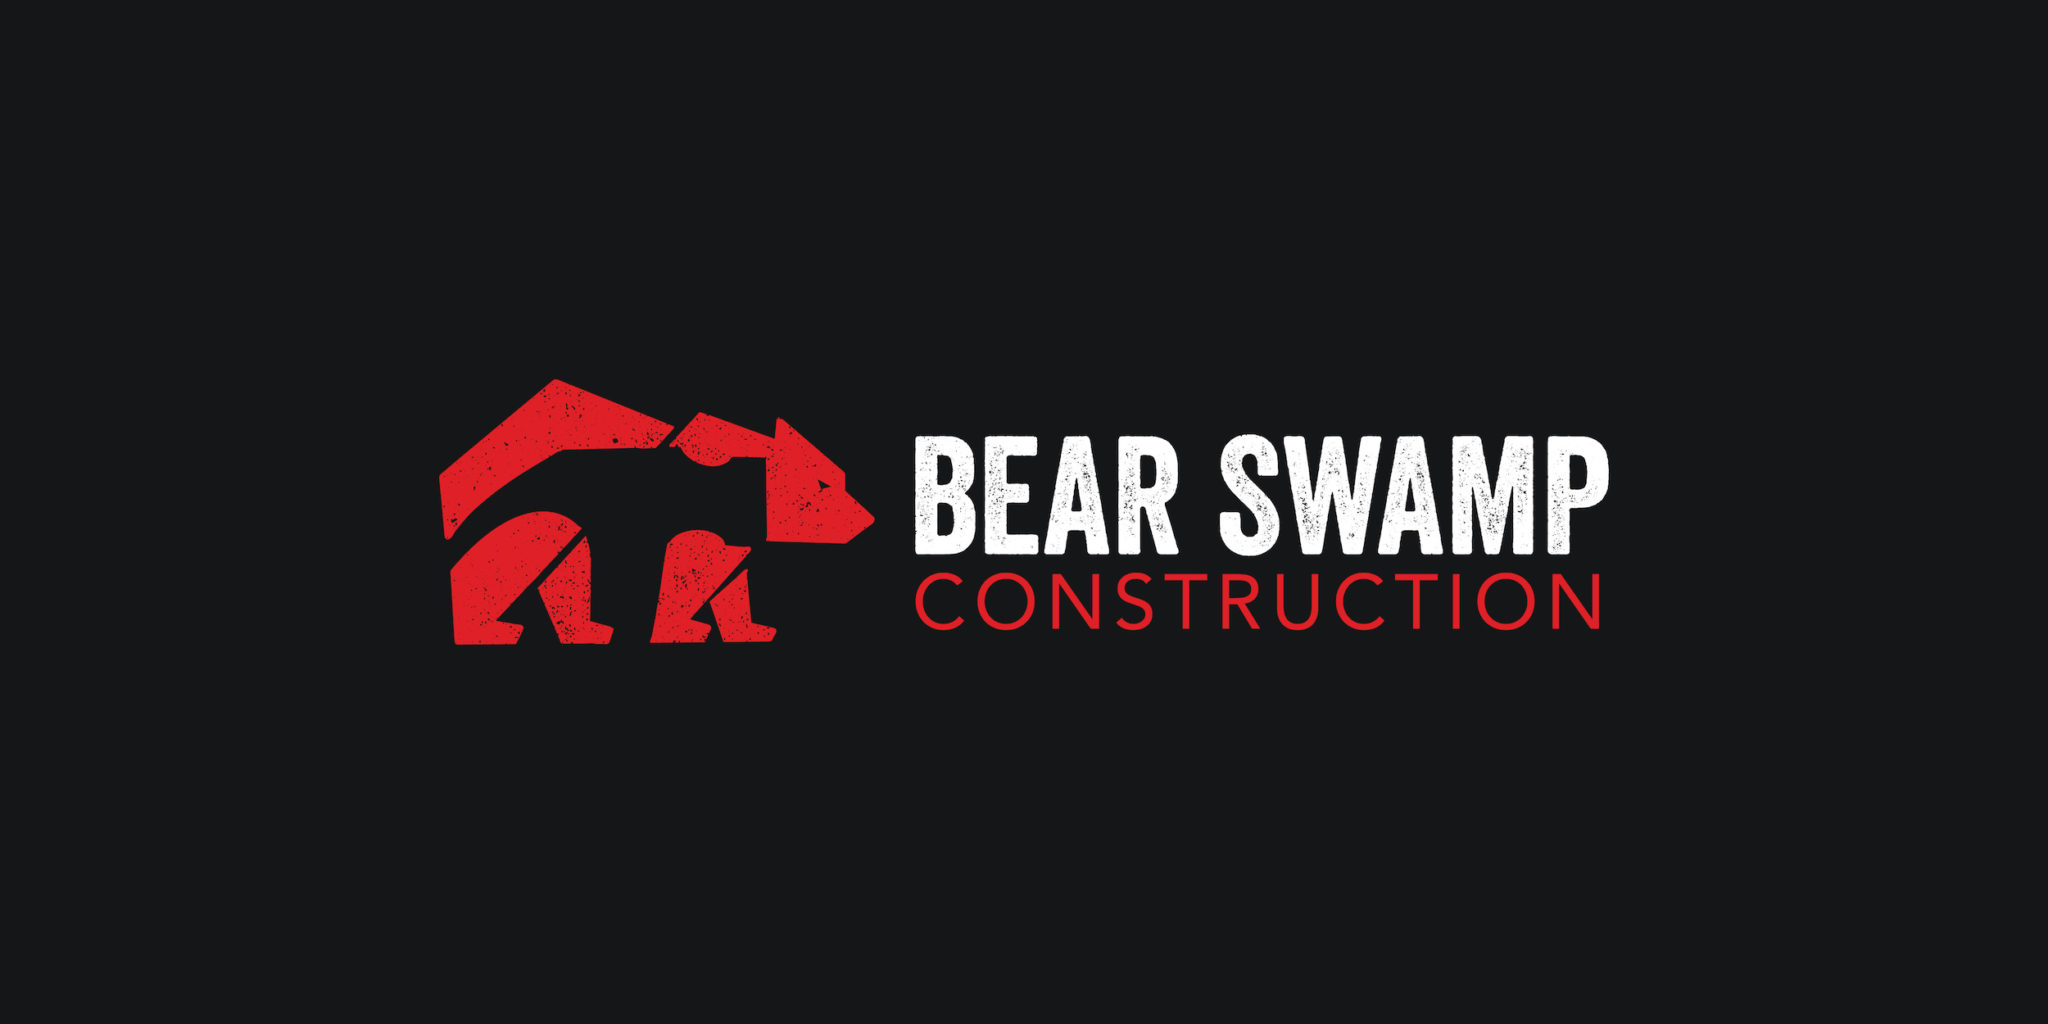 Bear Swamp Construction branding designed by Šek Design Studio